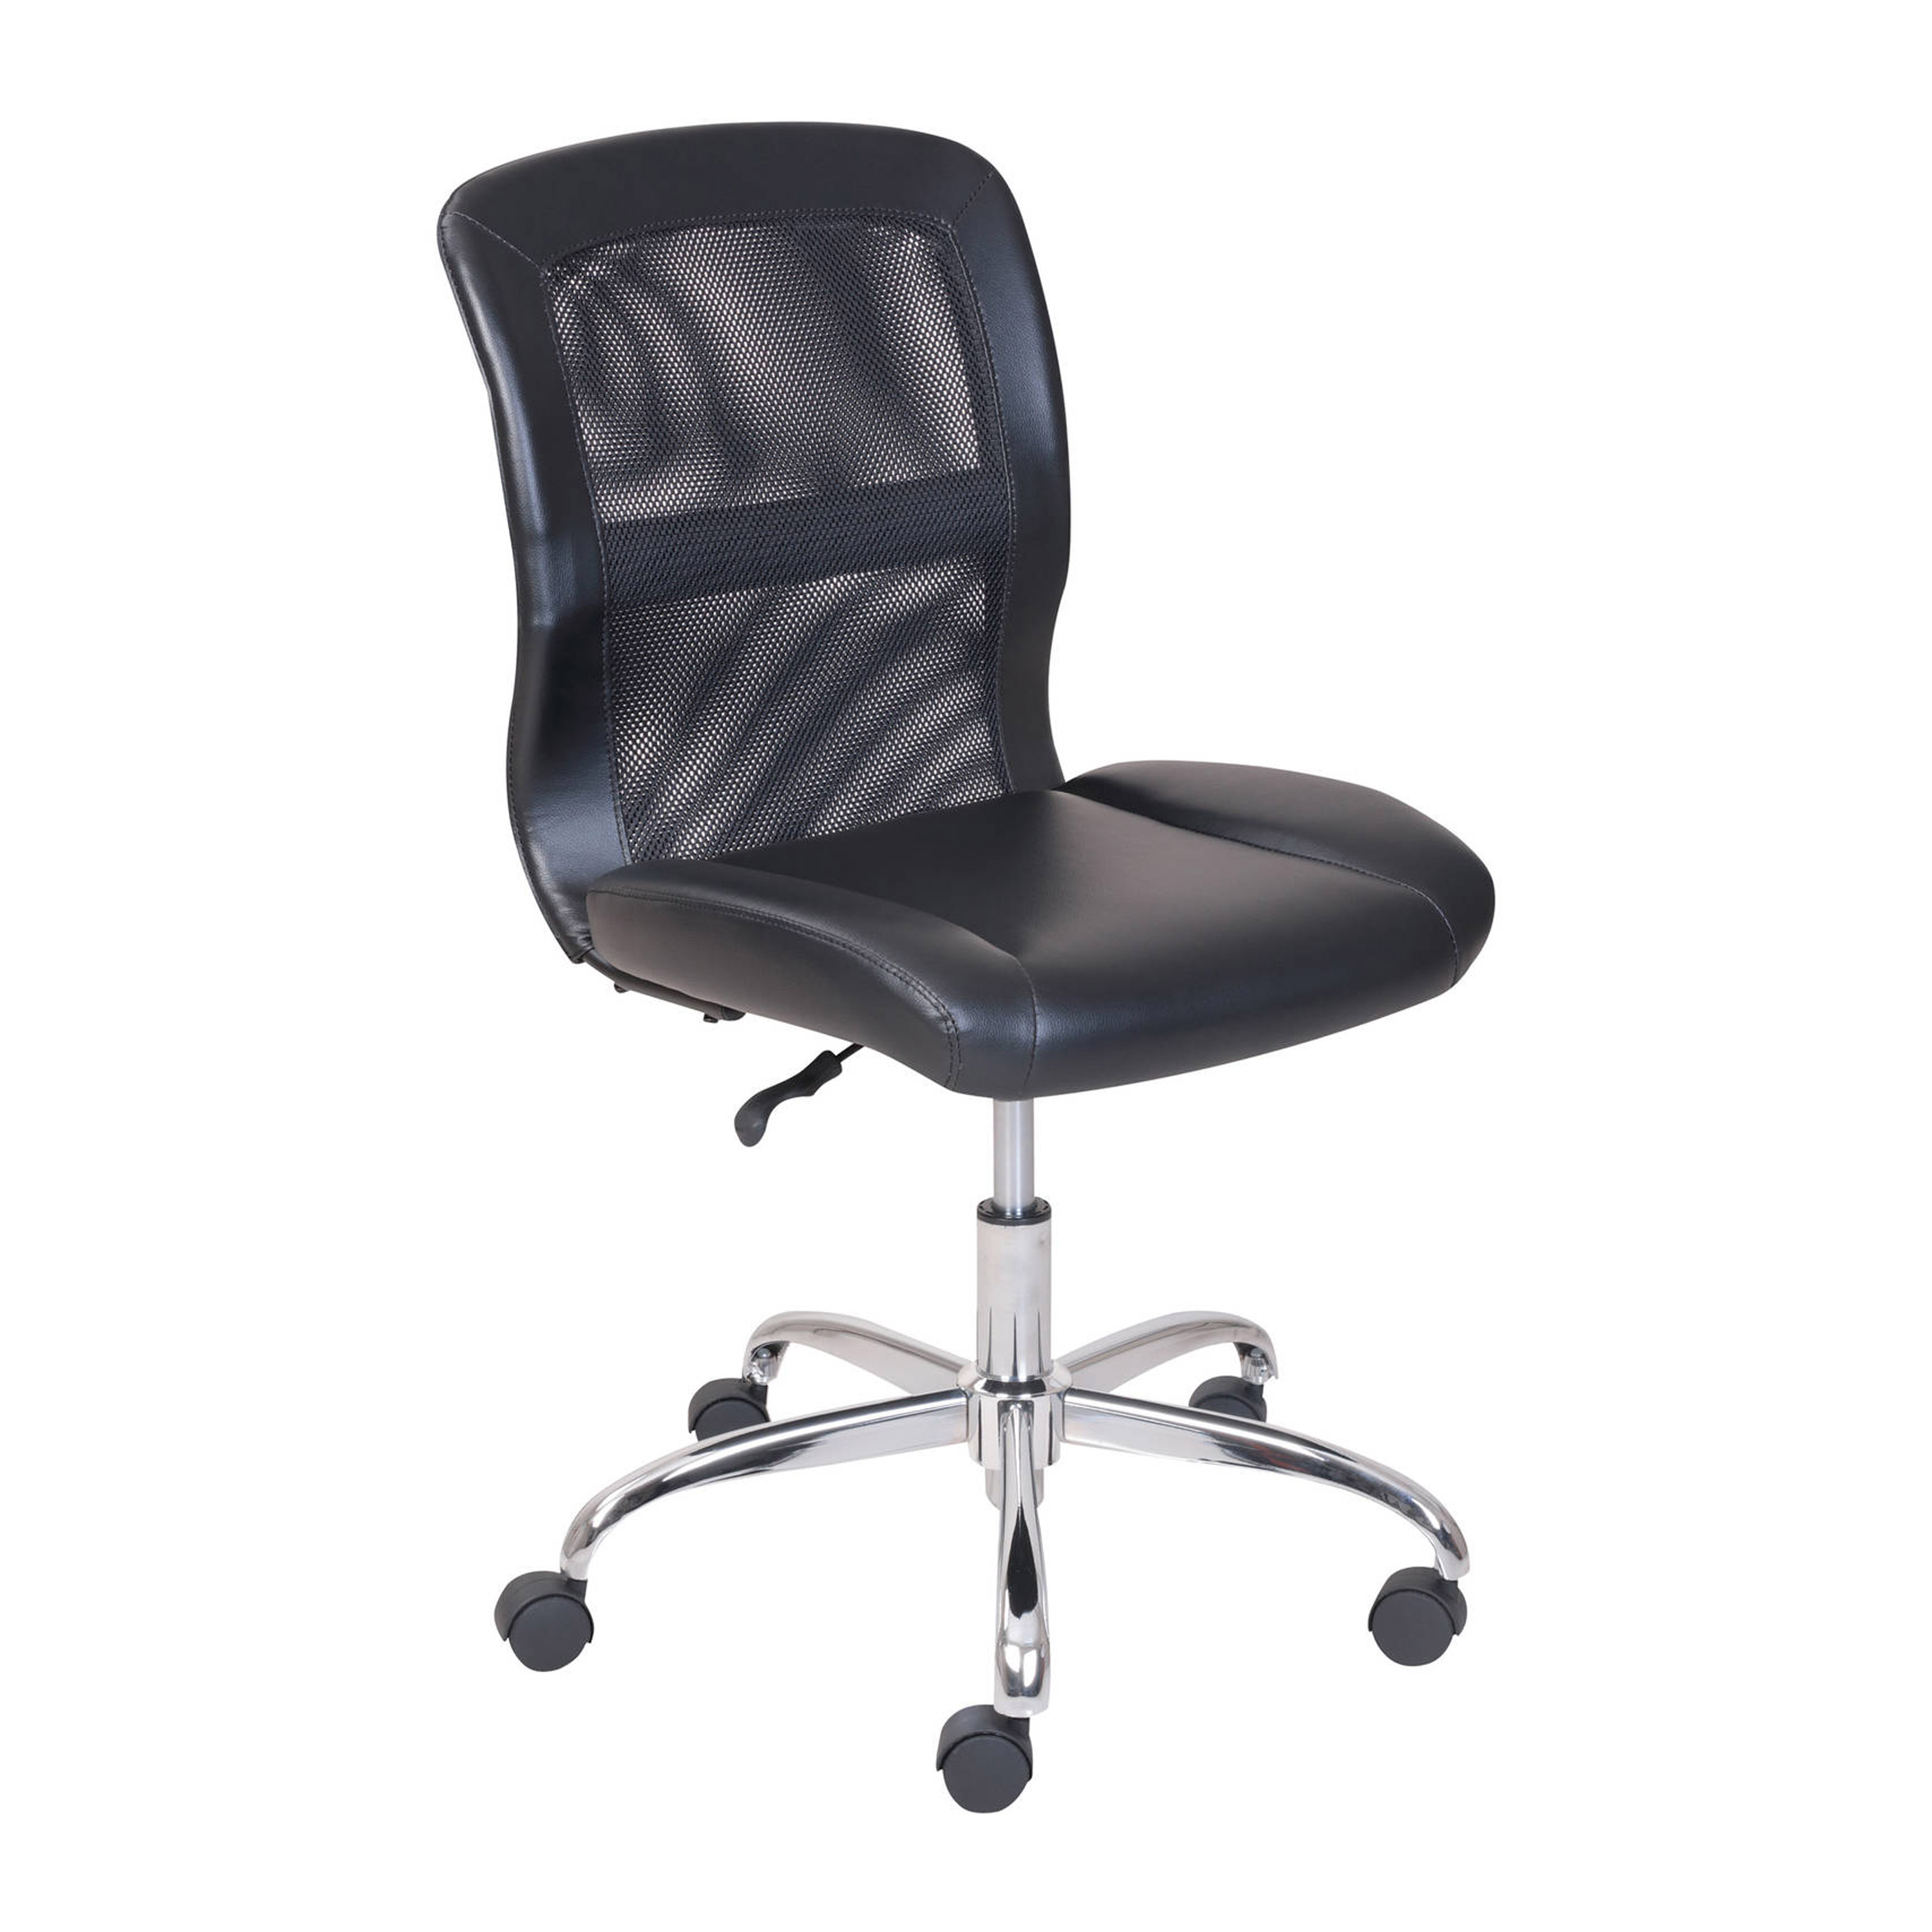 Mainstays Mid-Back, Vinyl Mesh Task Office Chair, Black - image 5 of 9